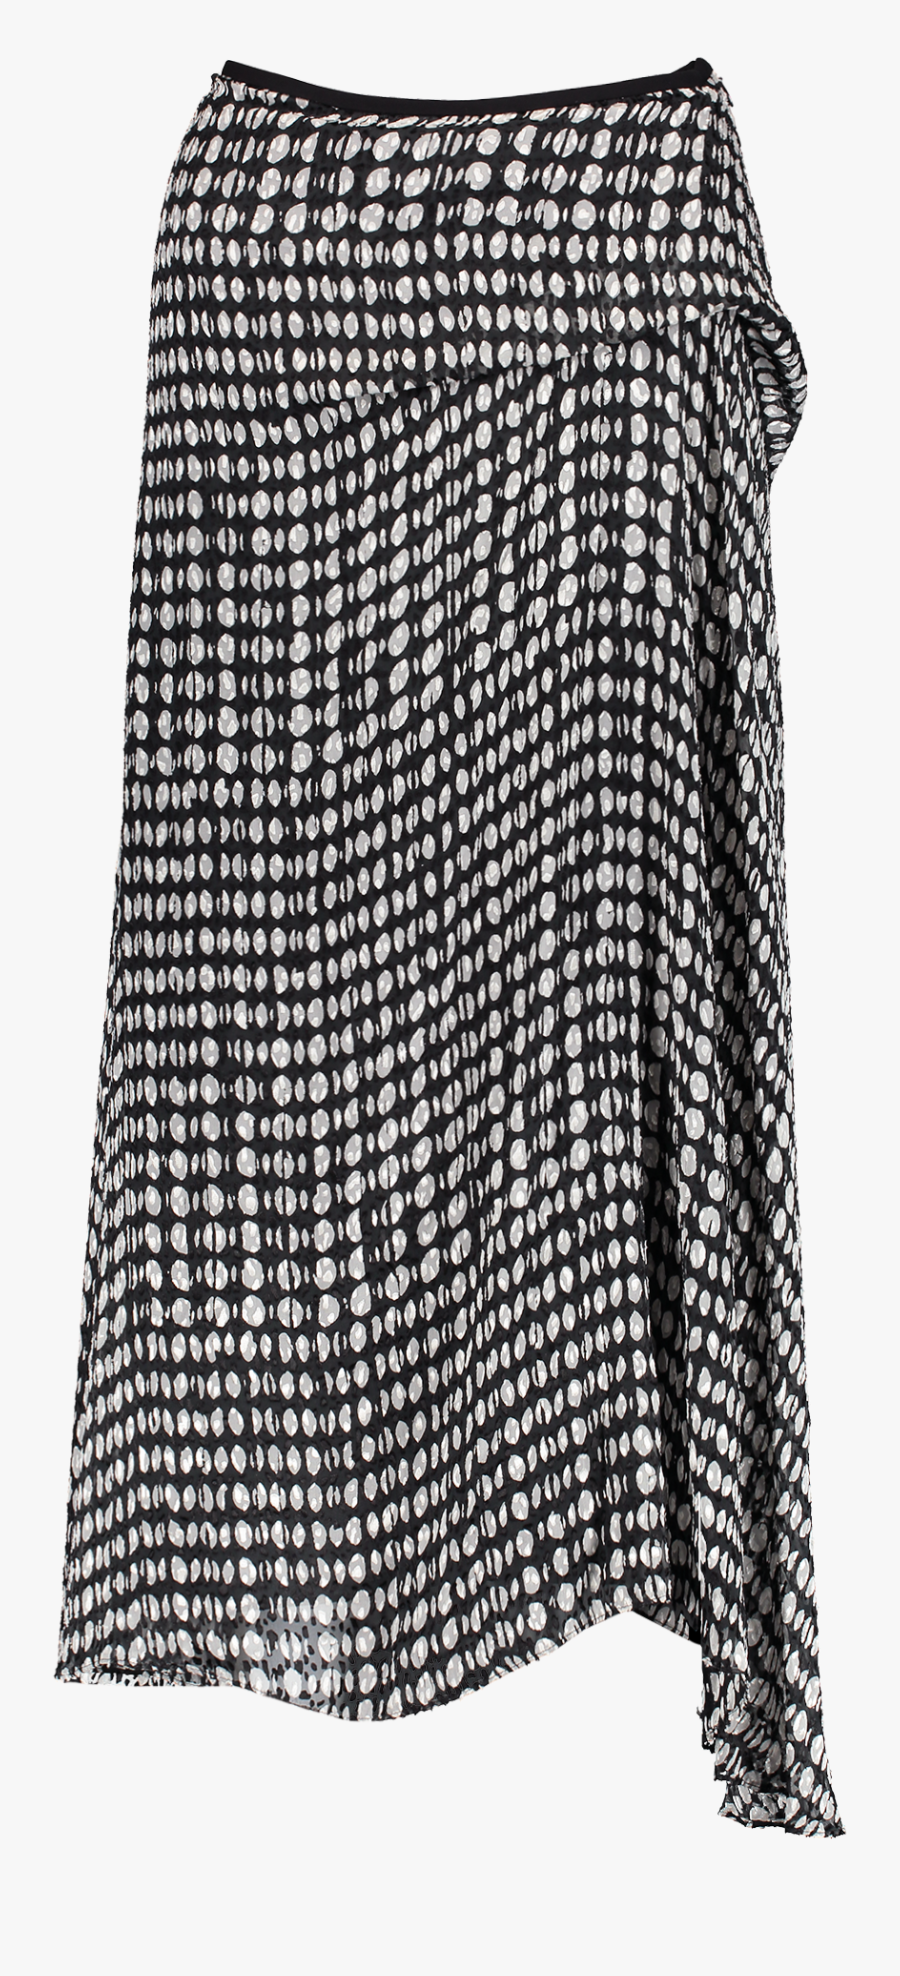 Transparent Drape Png - Tennis Skirt, Transparent Clipart